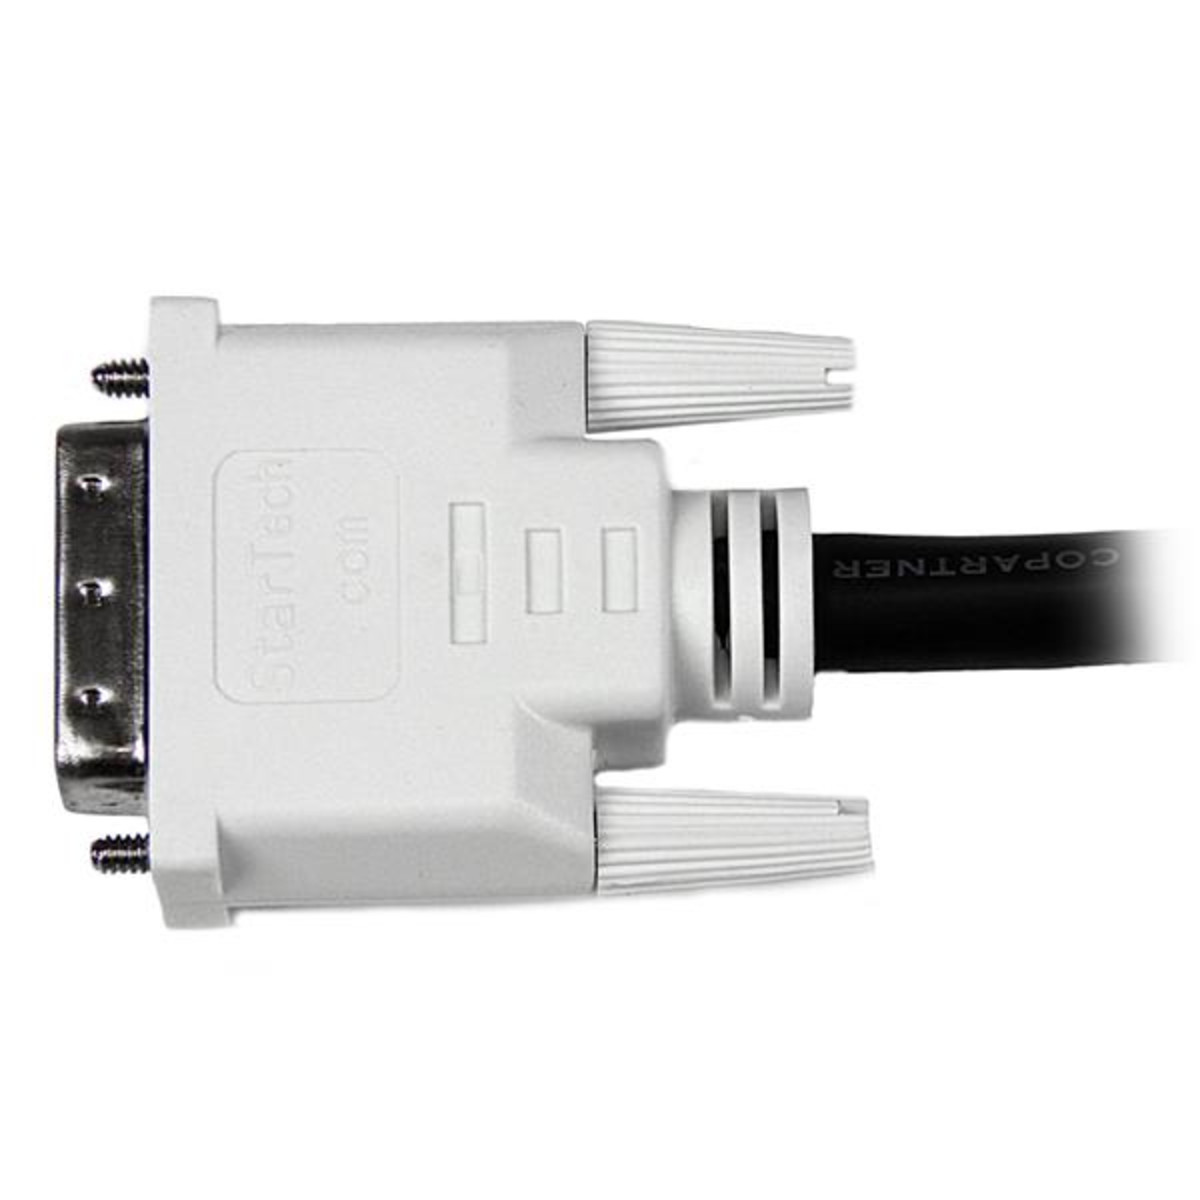 1m DL DVI-D 25pin DVID Digital Cable